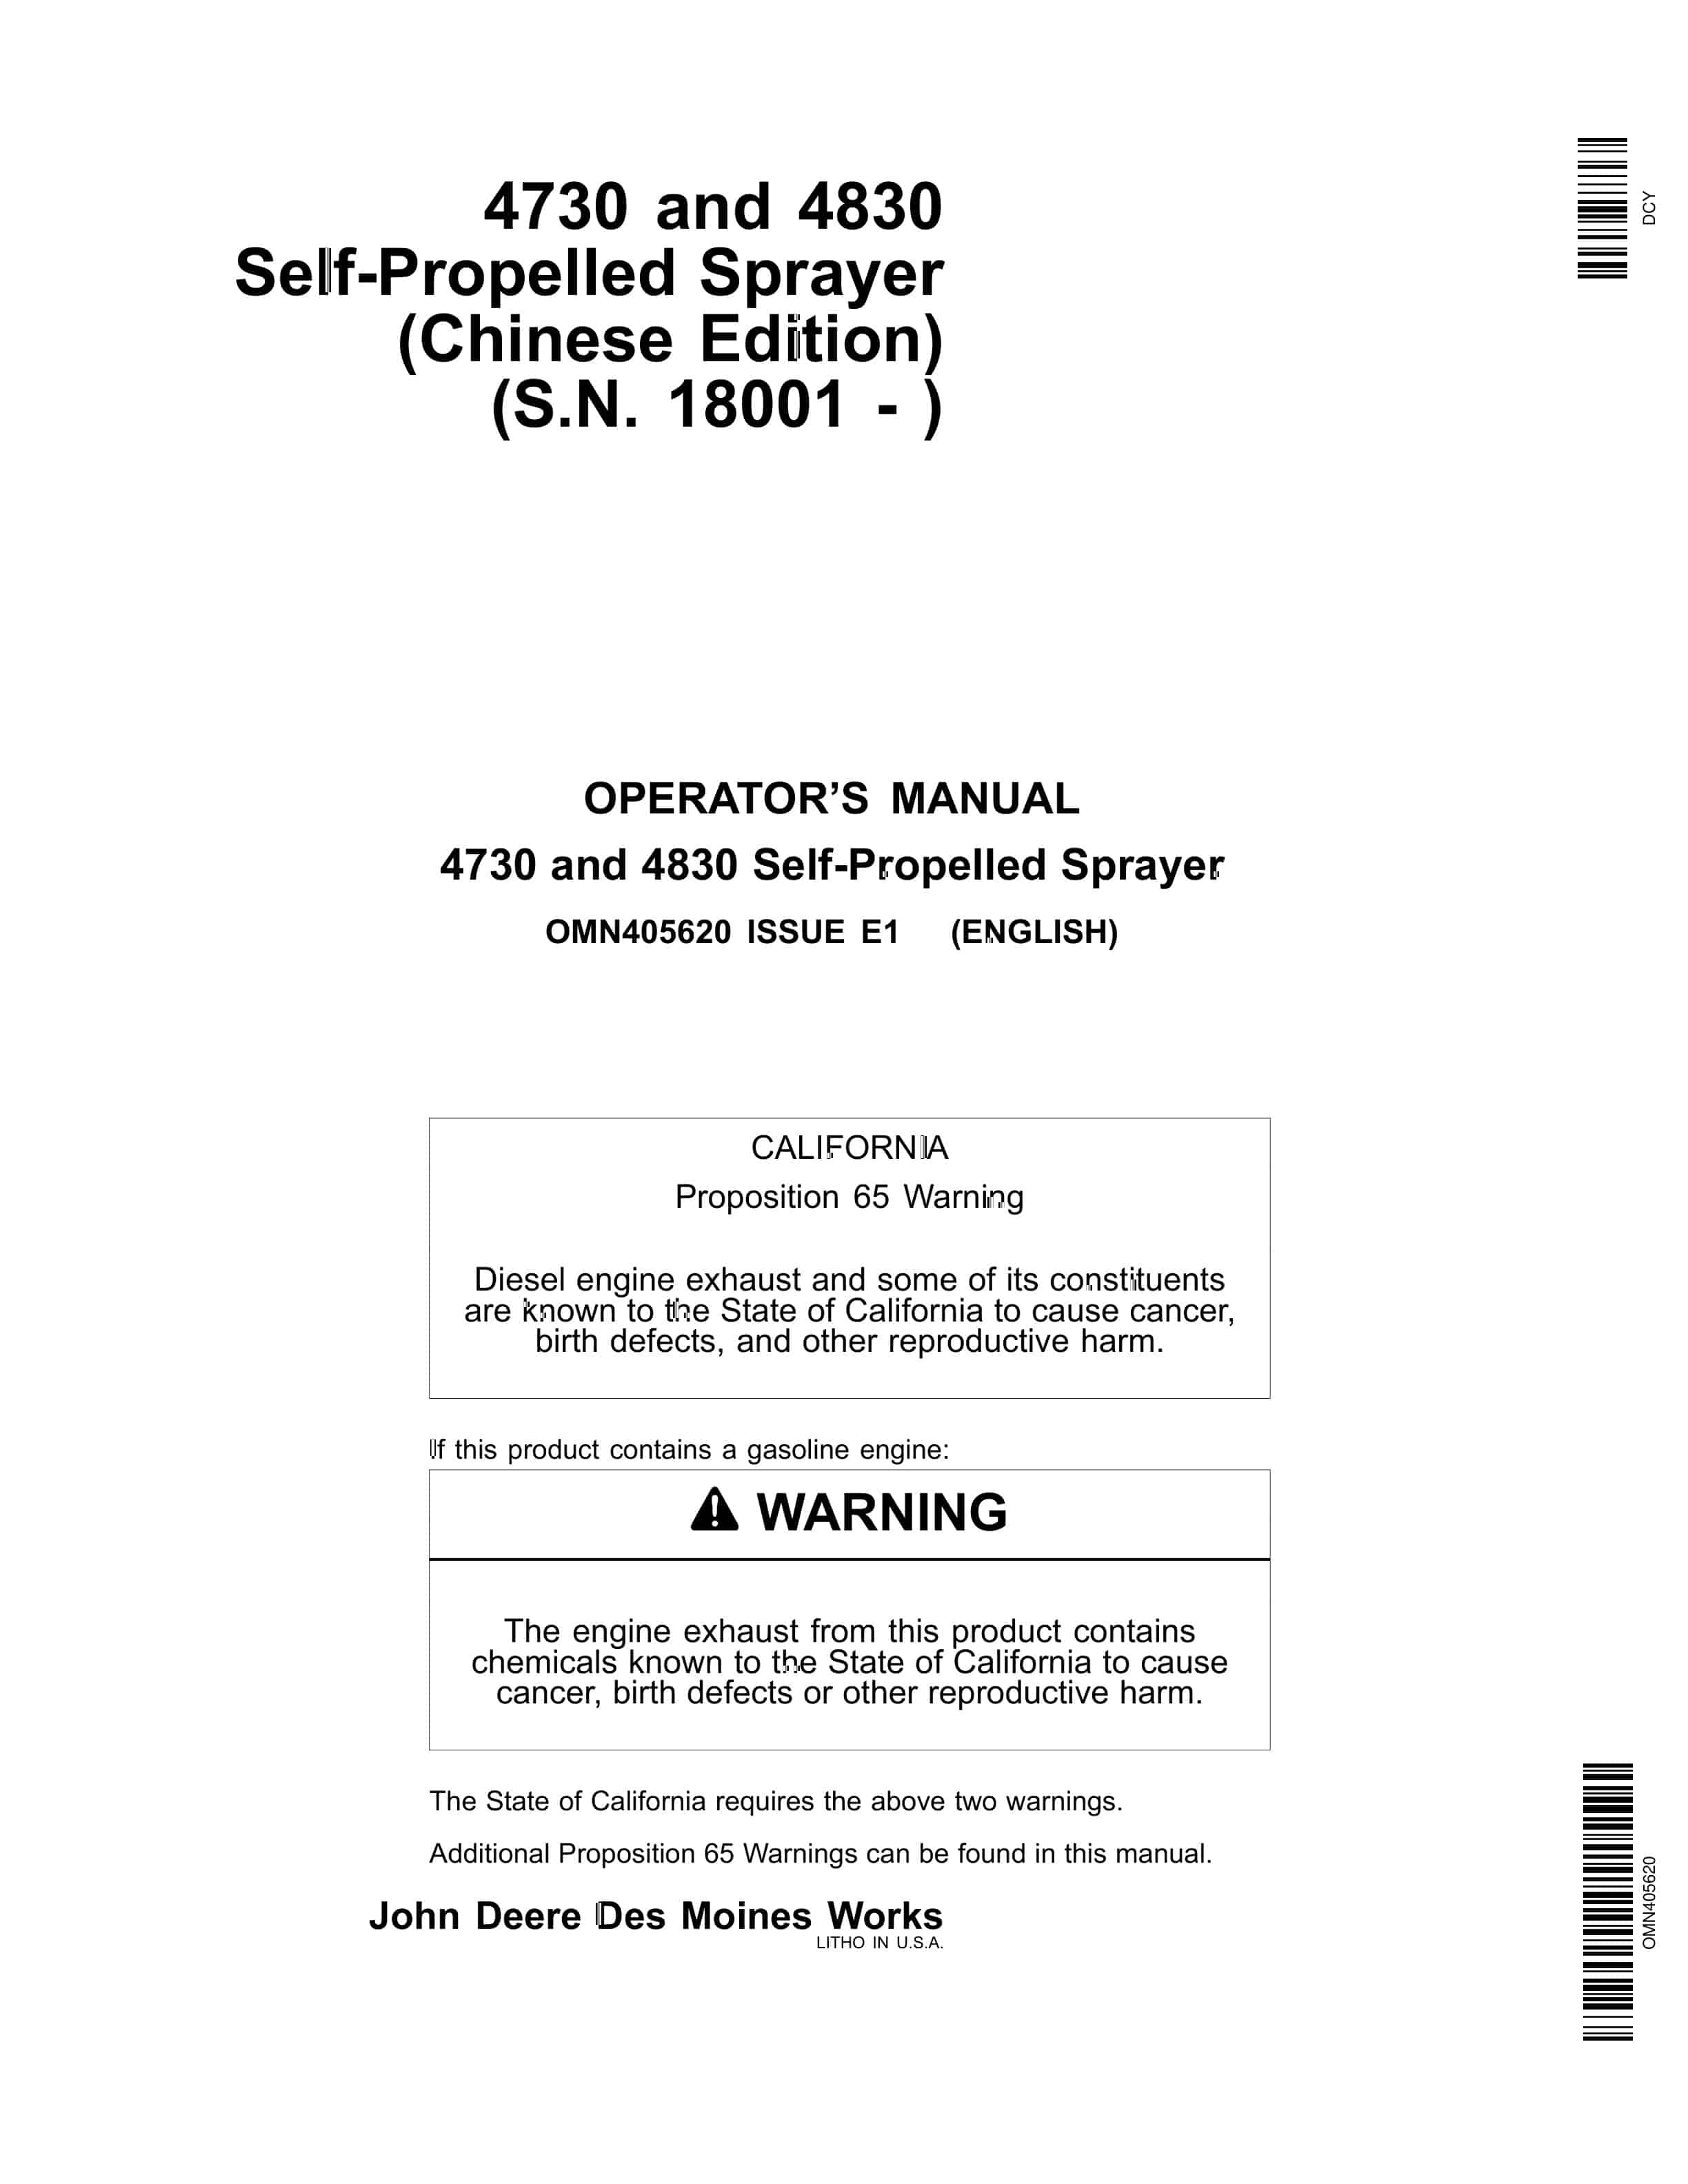 John Deere 4730 and 4830 Self­Propelled Sprayer Operator Manual OMN405620-1